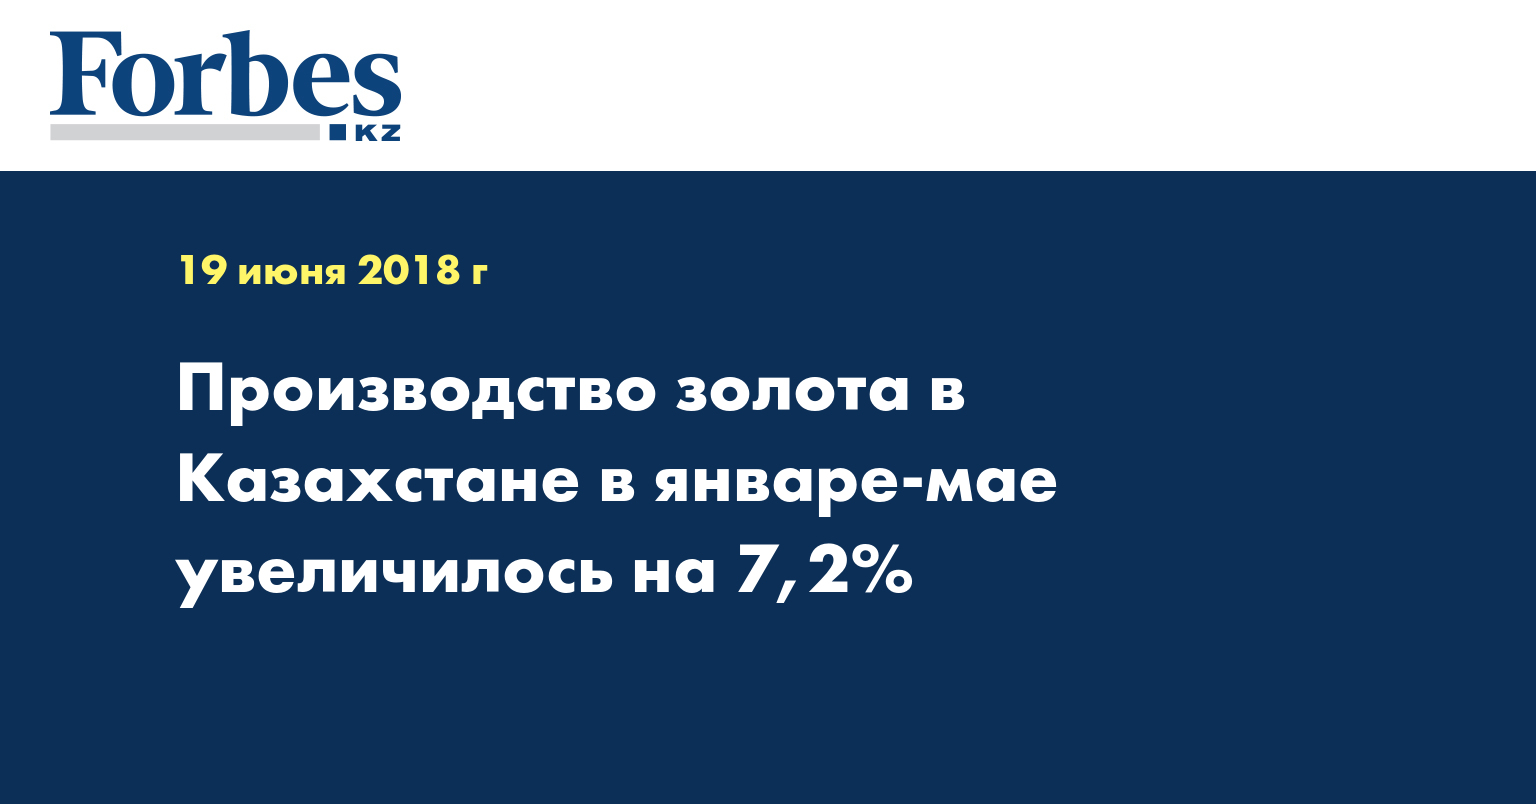 Производство золота в Казахстане в январе-мае увеличилось на 7,2%